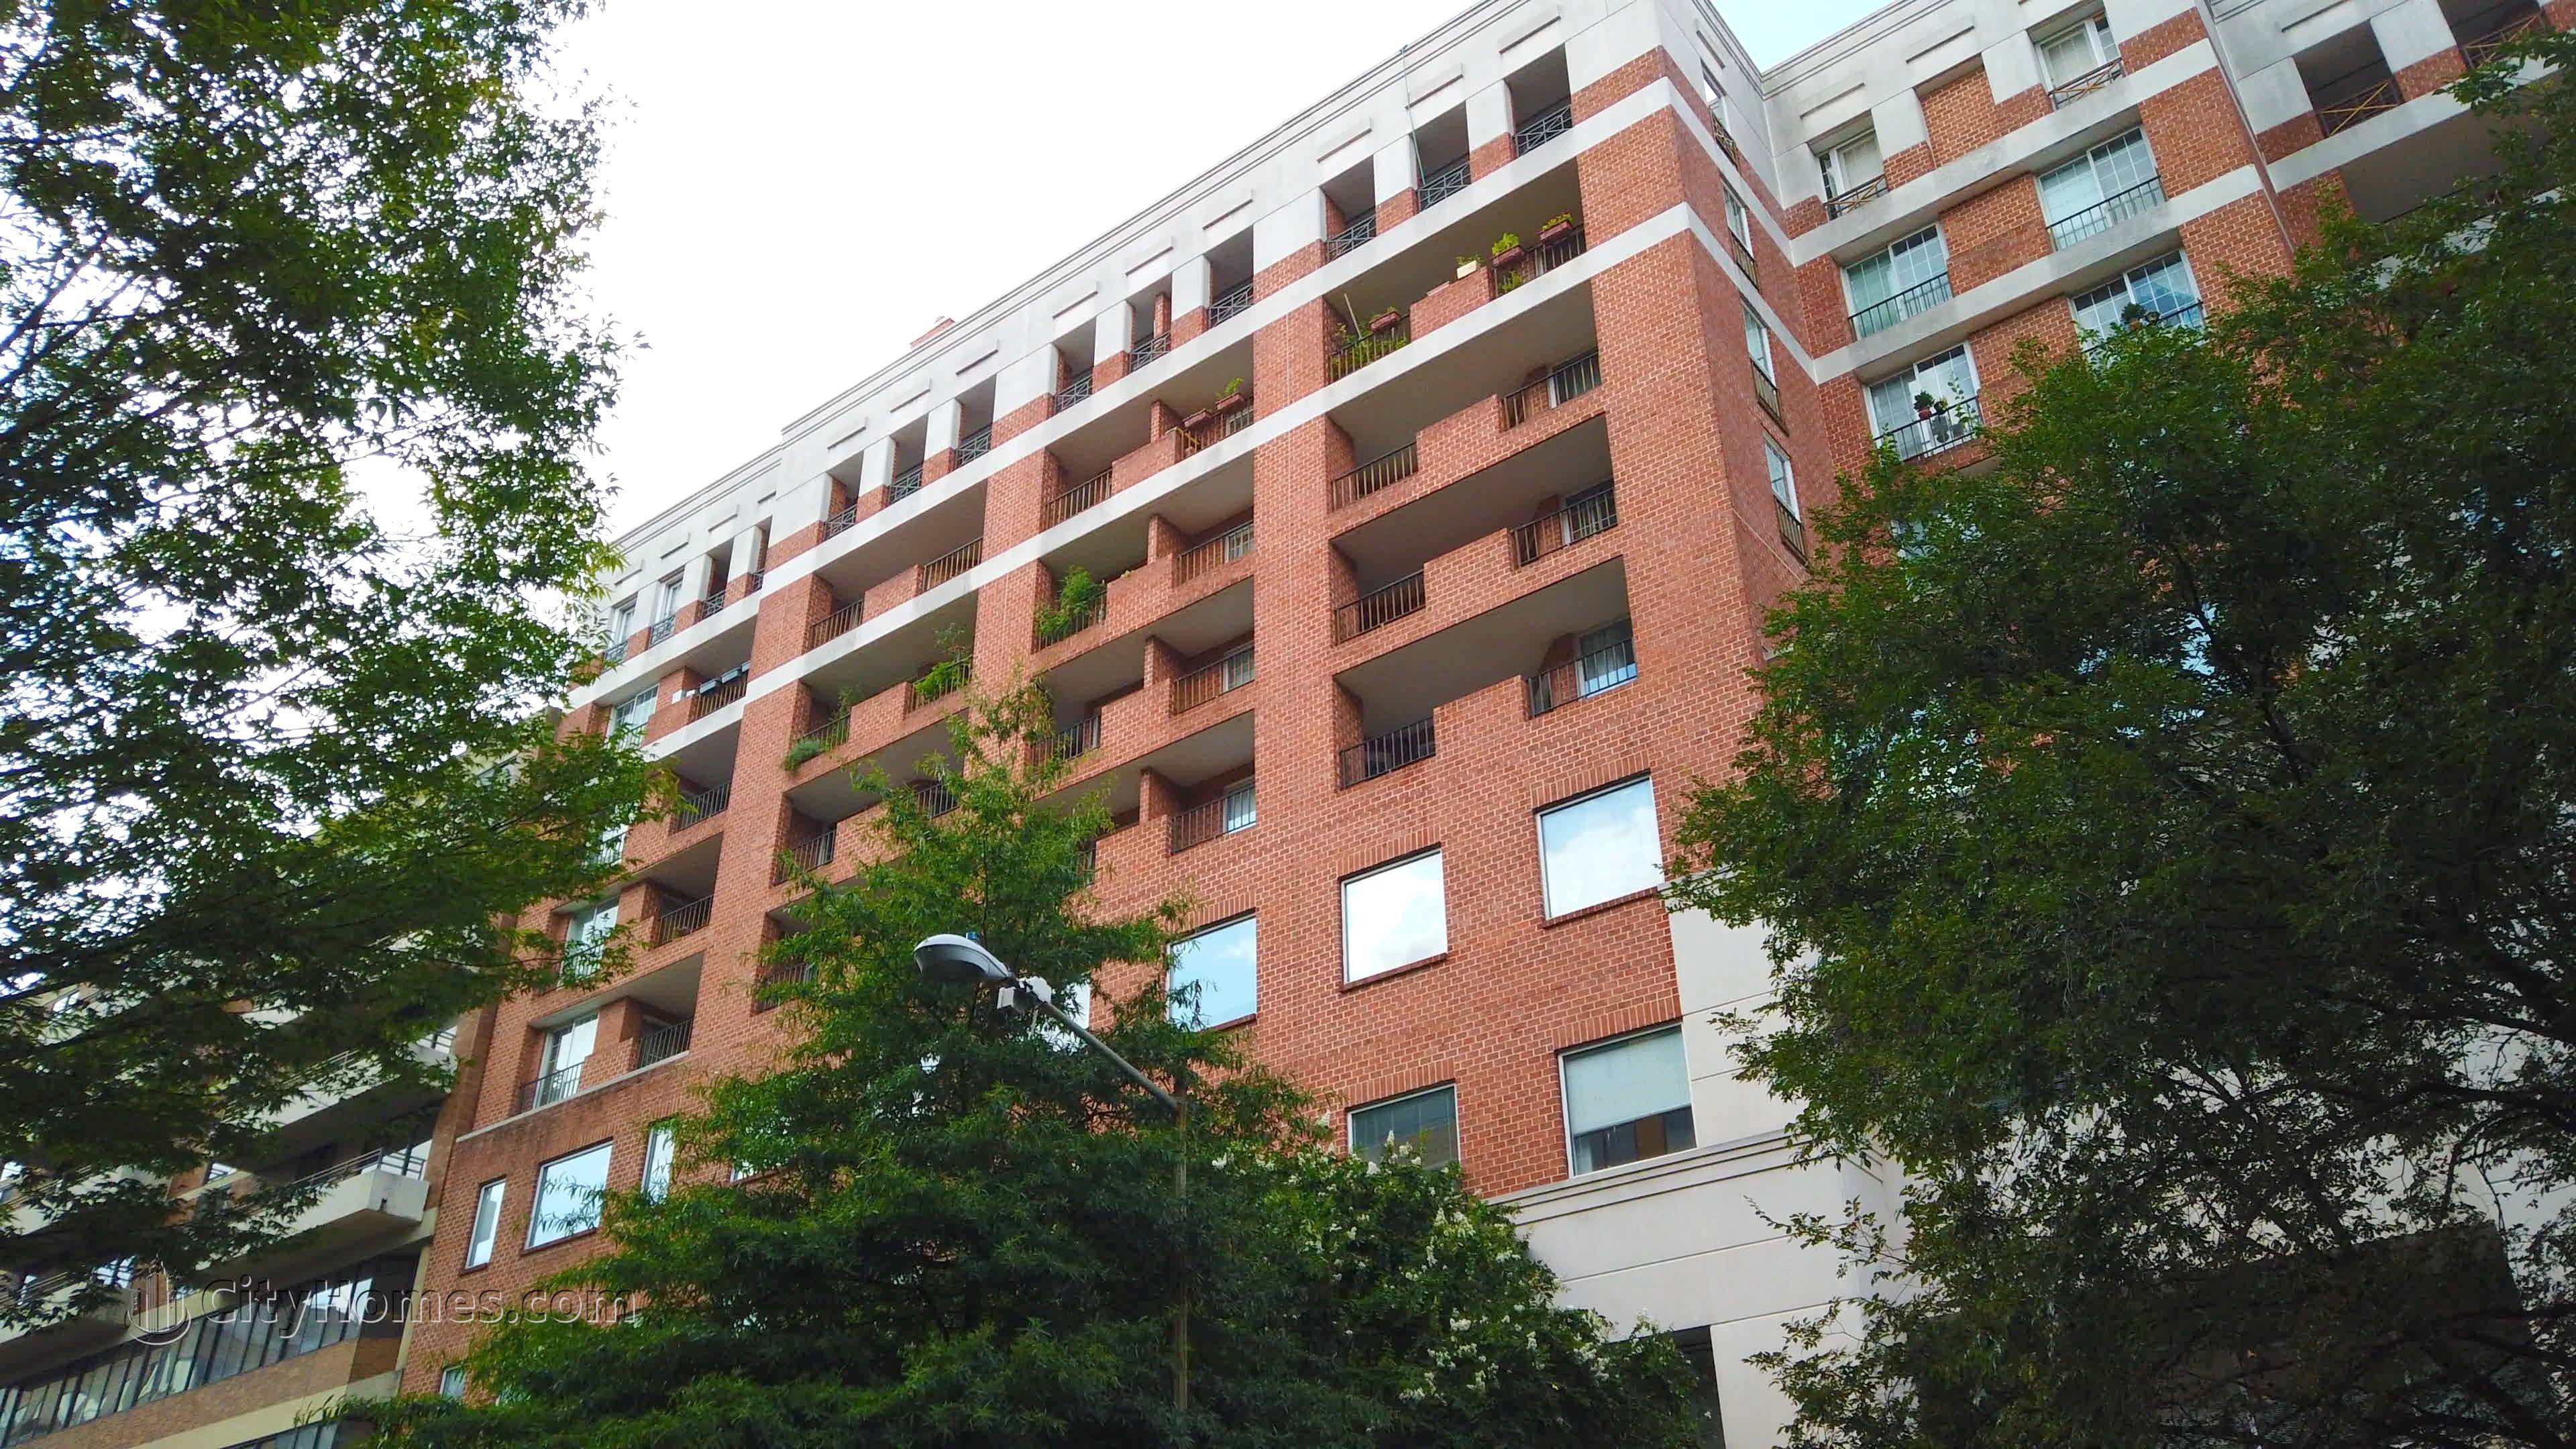 7. Metropolitan Condos xây dựng tại 1230 23rd St NW, West End, Washington, DC 20037